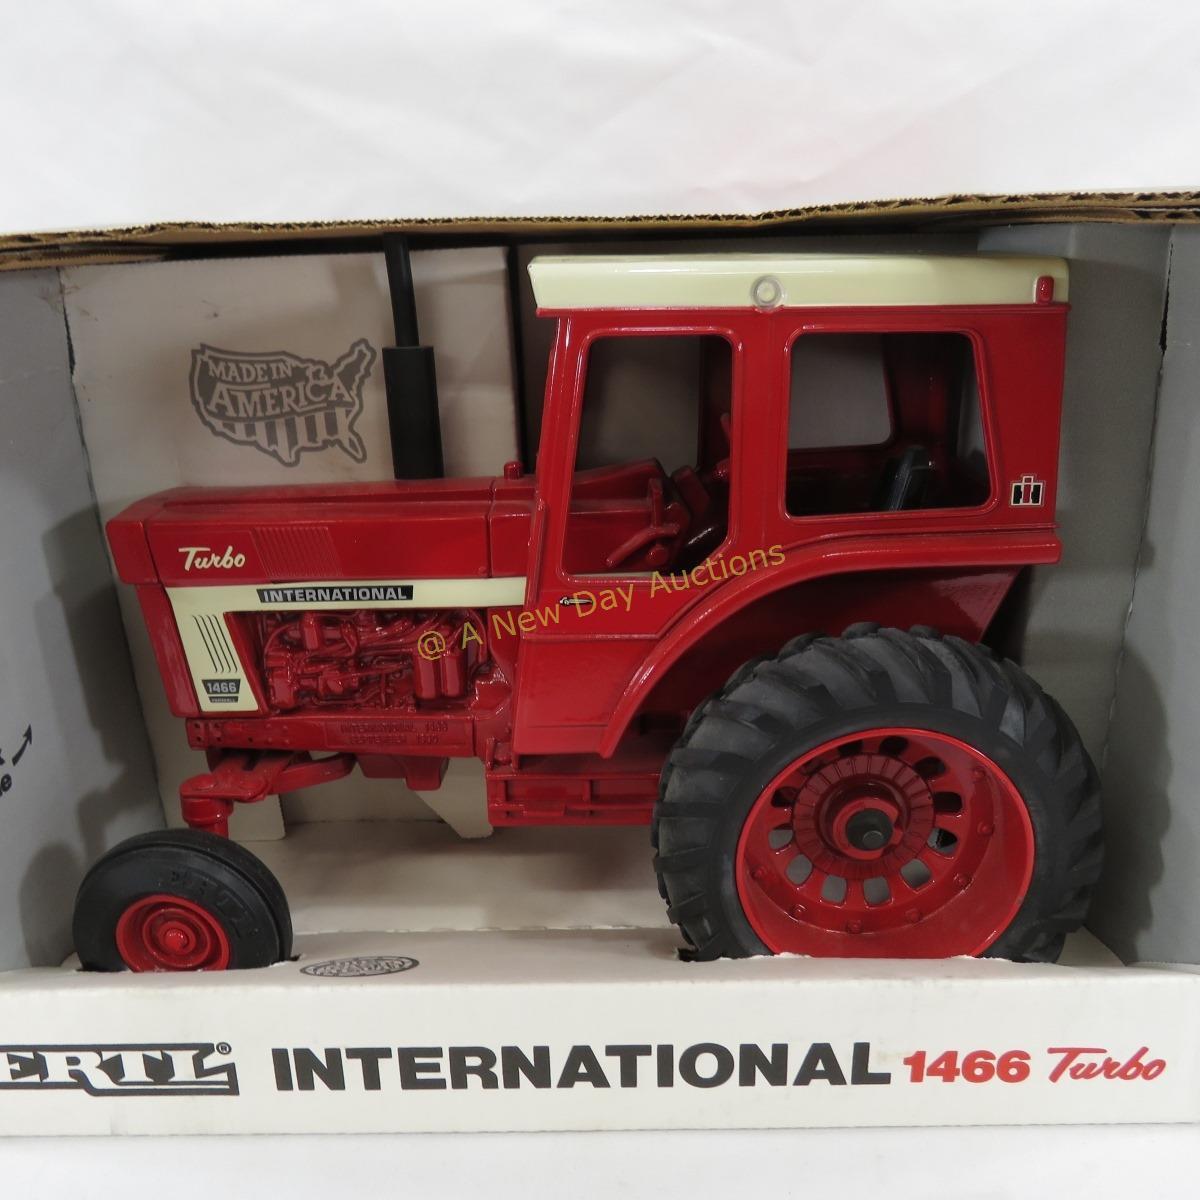 Ertl International 1466 Turbo Tractor # 4622